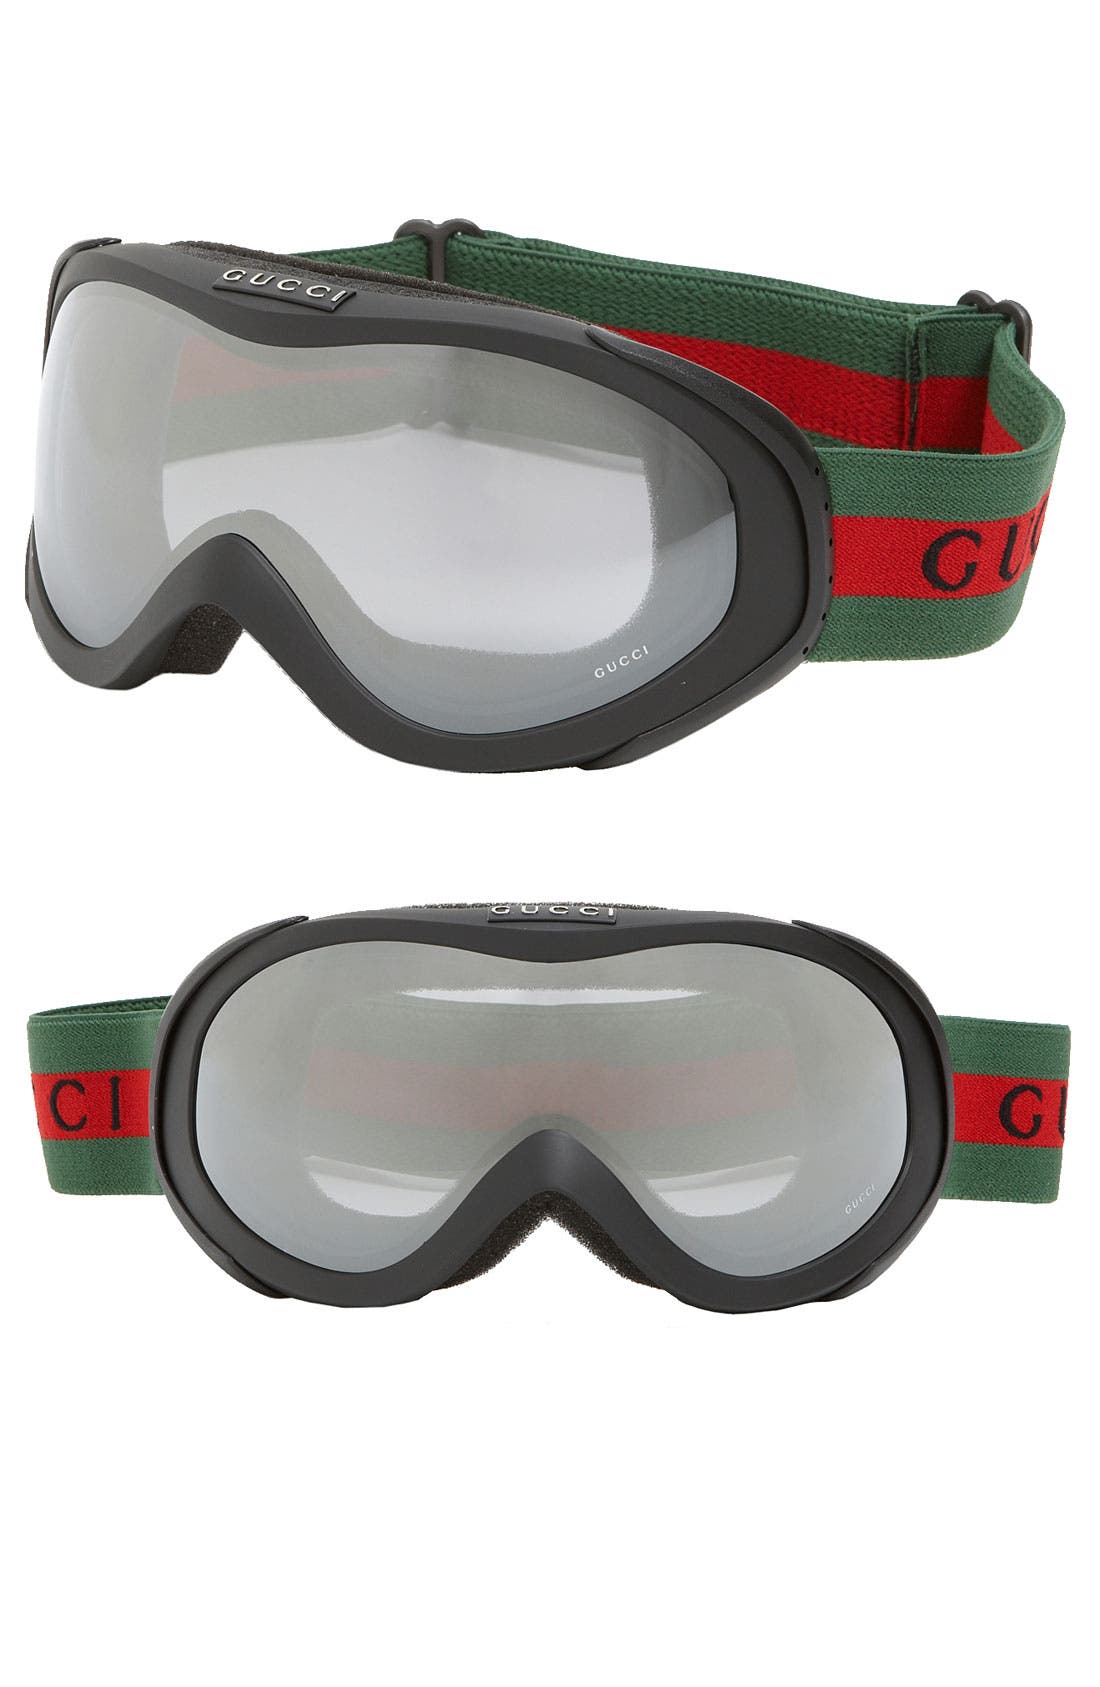 gucci dirt bike goggles